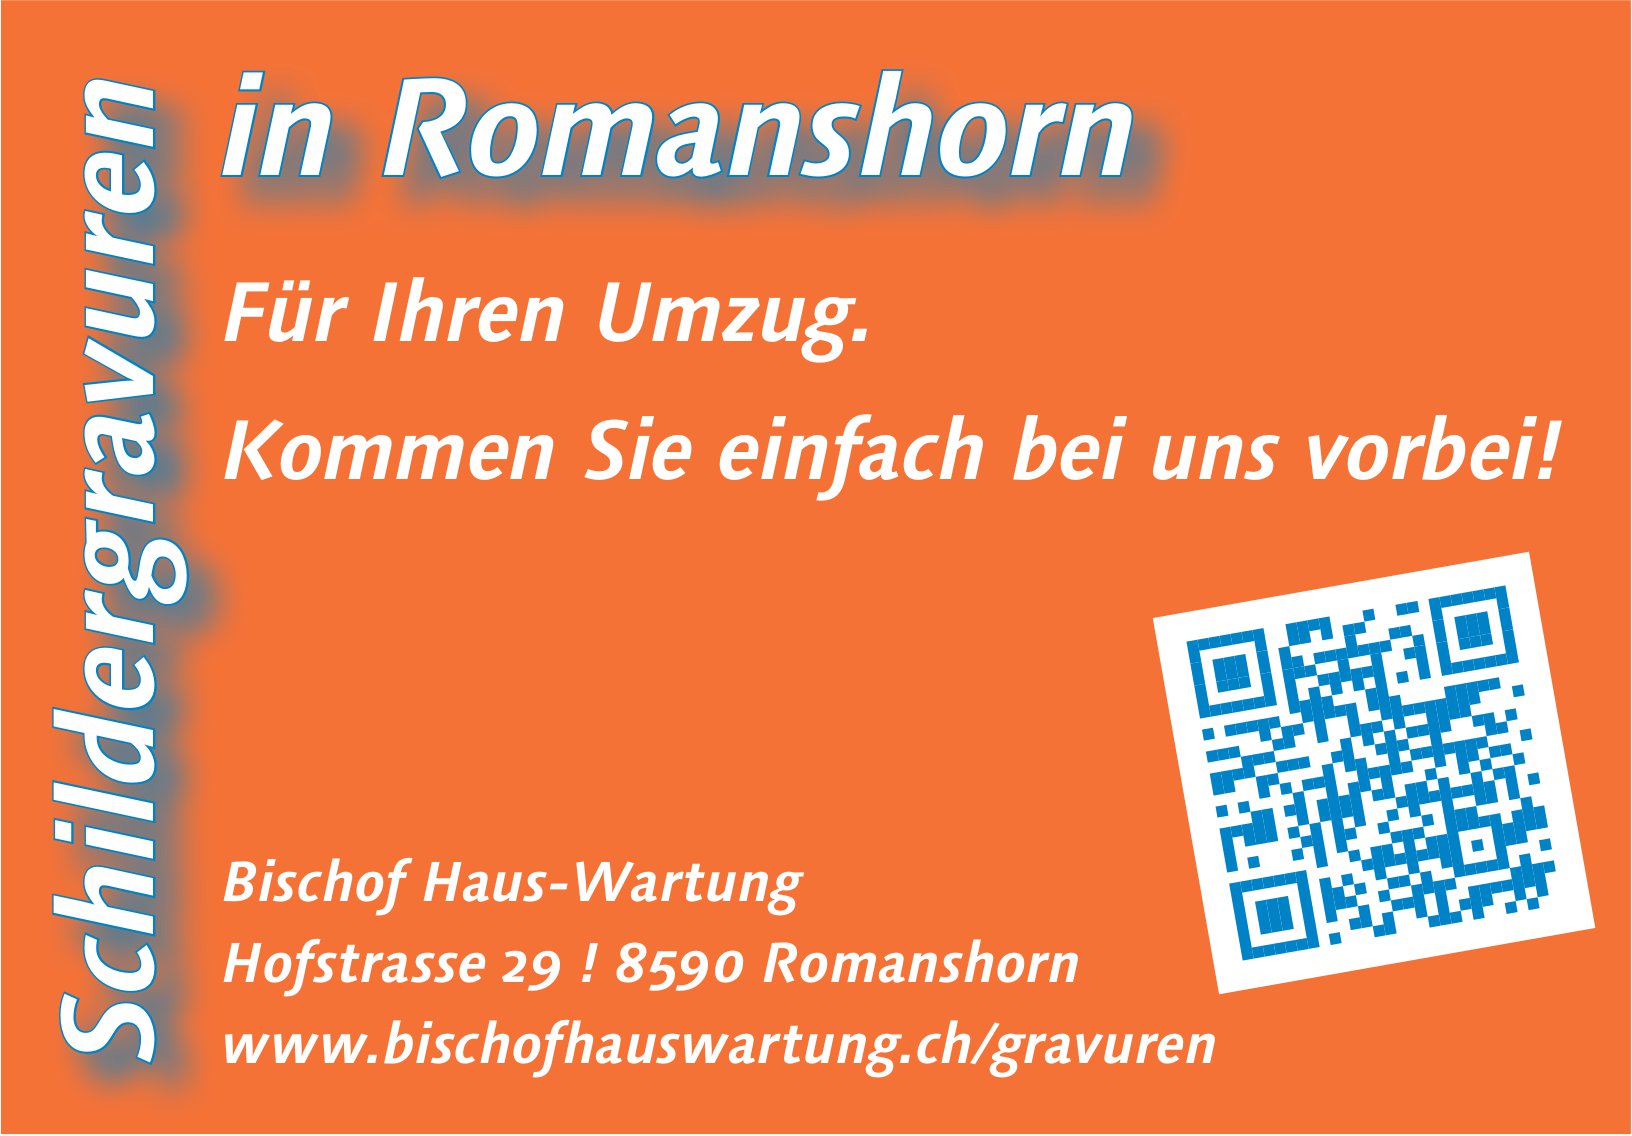 Bischof Haus-Wartung, Romanshorn - Schildergravuren in Romanshorn